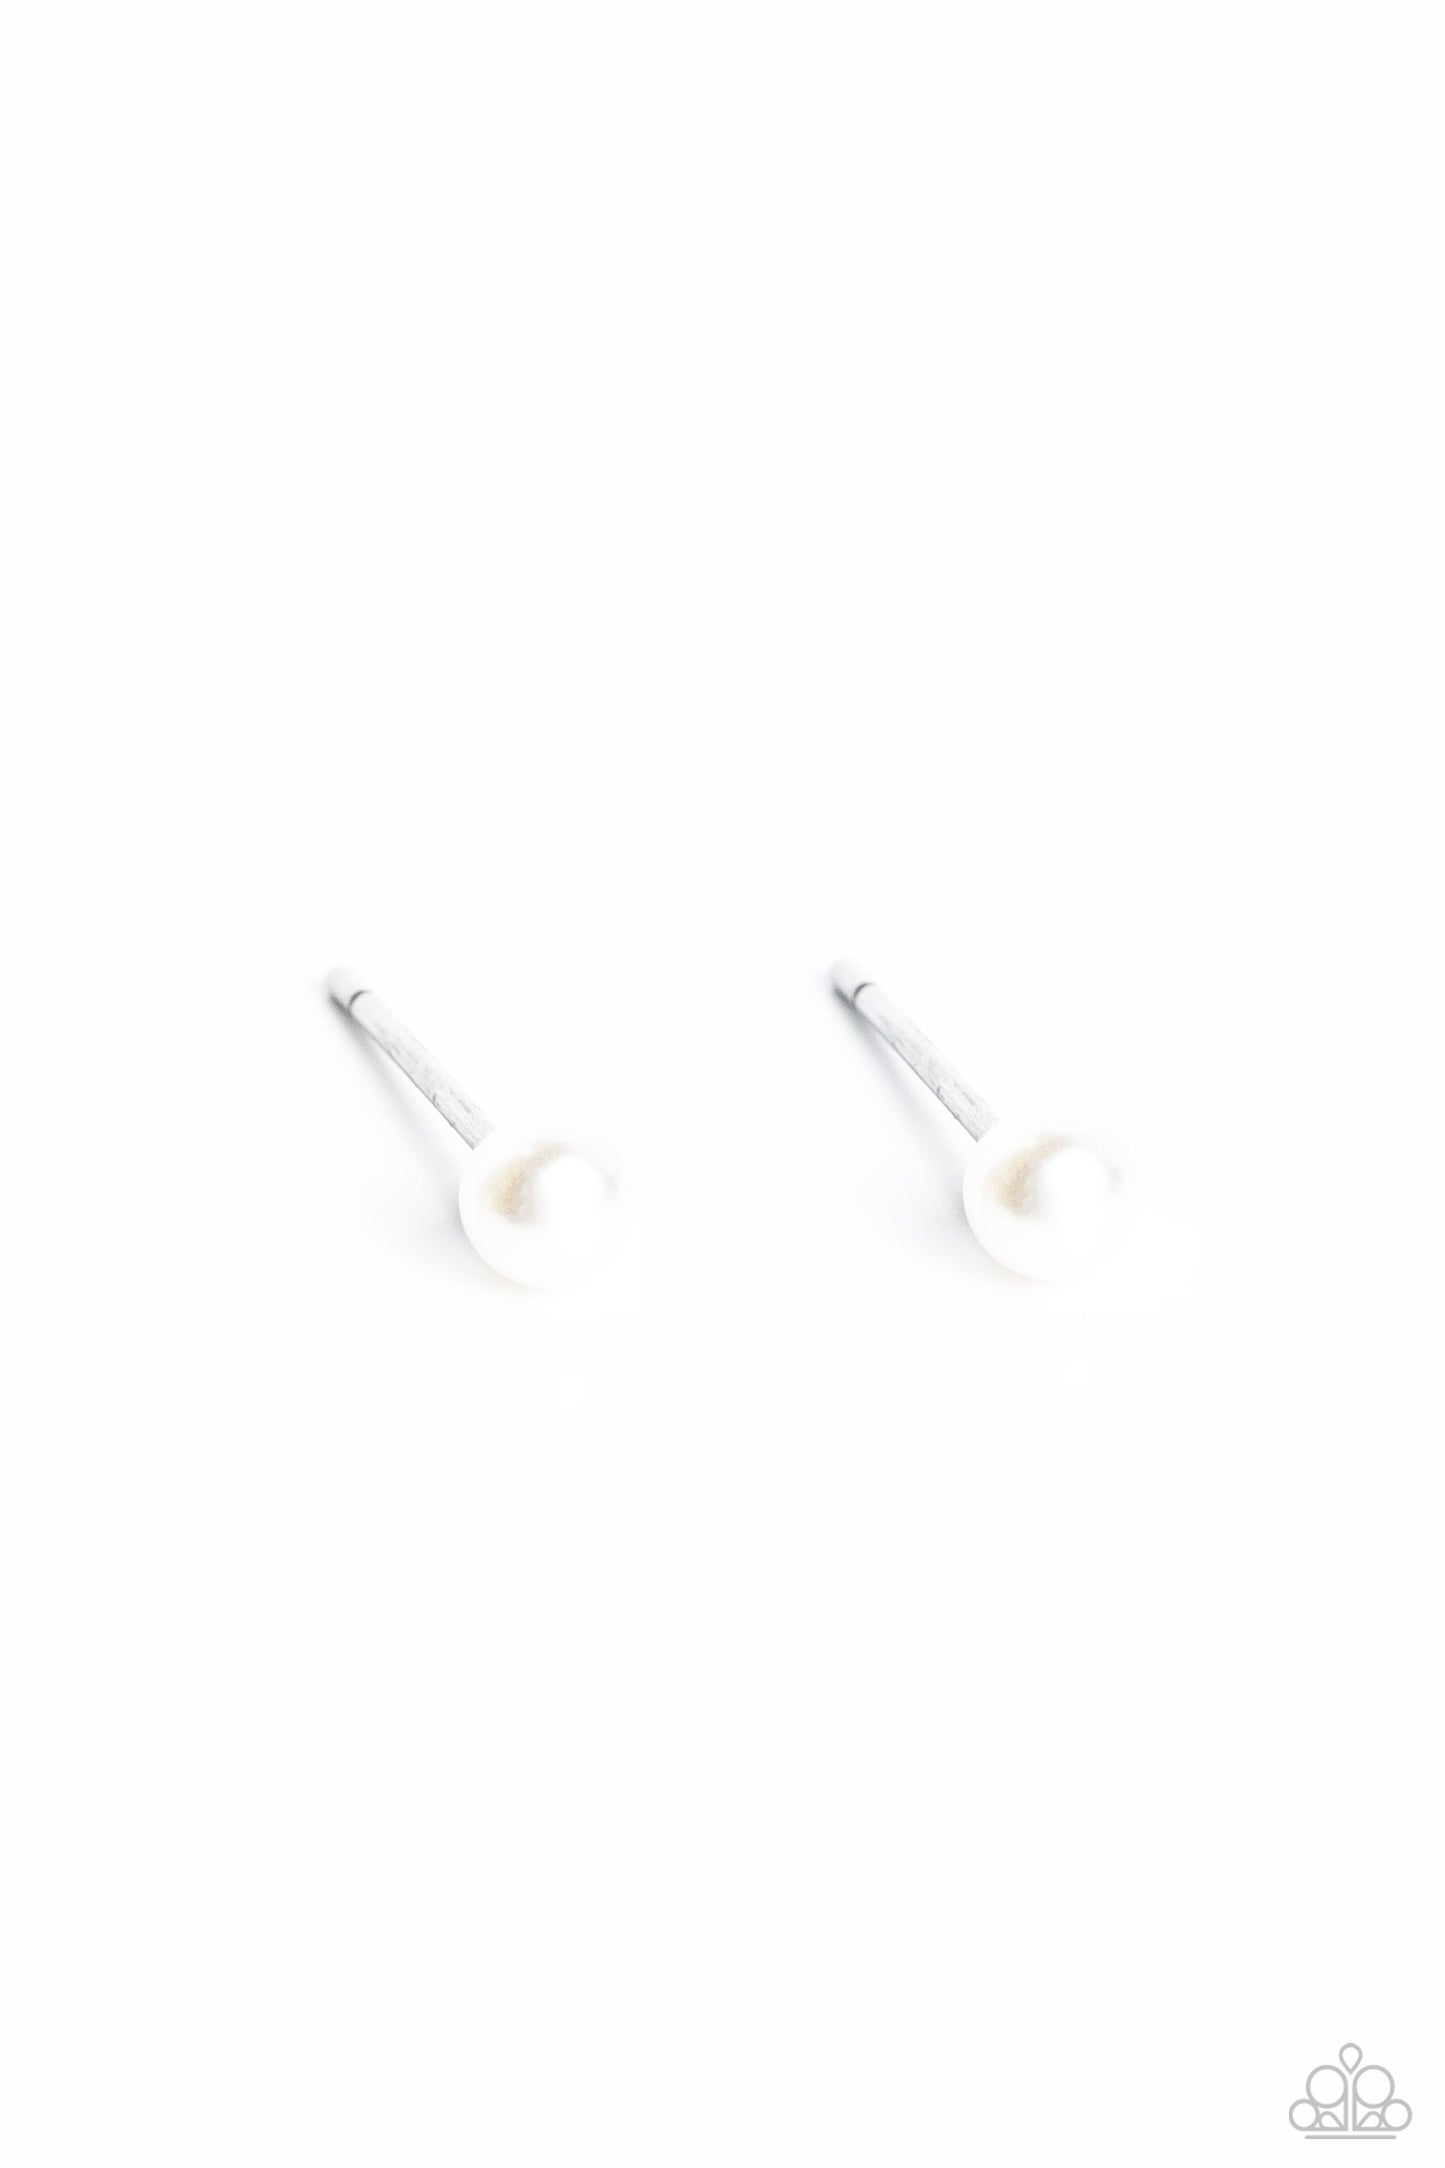 Dainty Details - White Earring